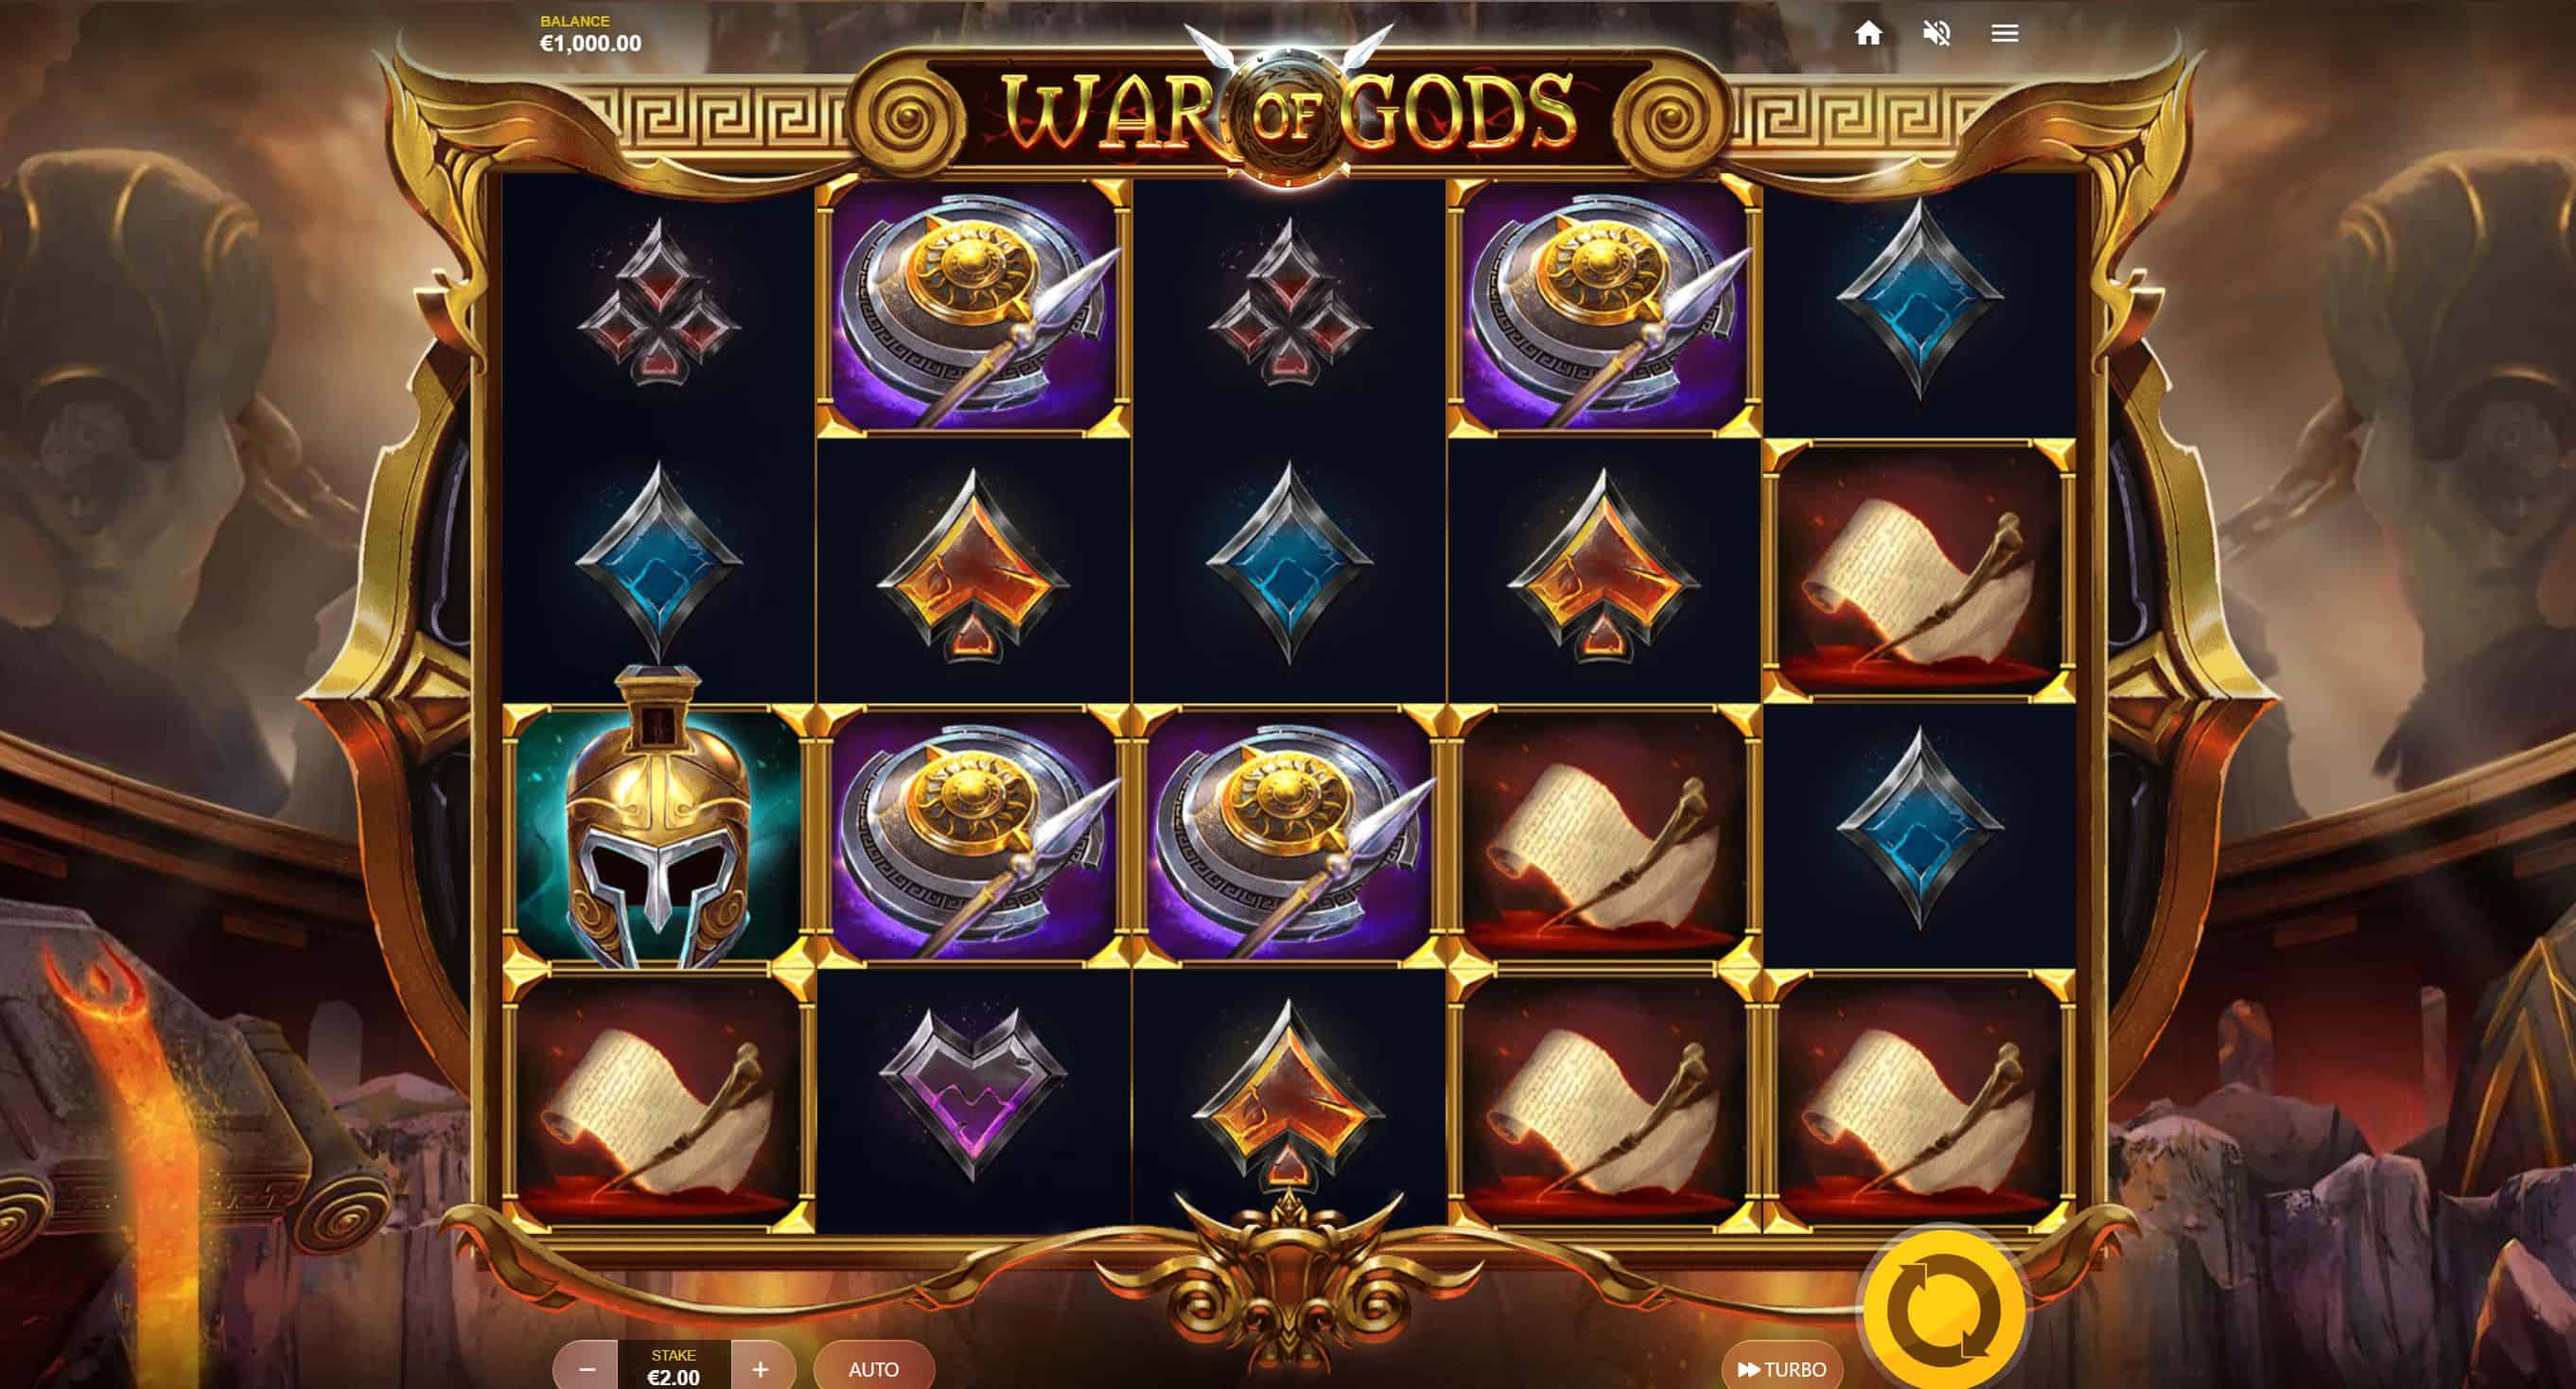 War of Gods Slot Game Free Play at Casino Ireland 01